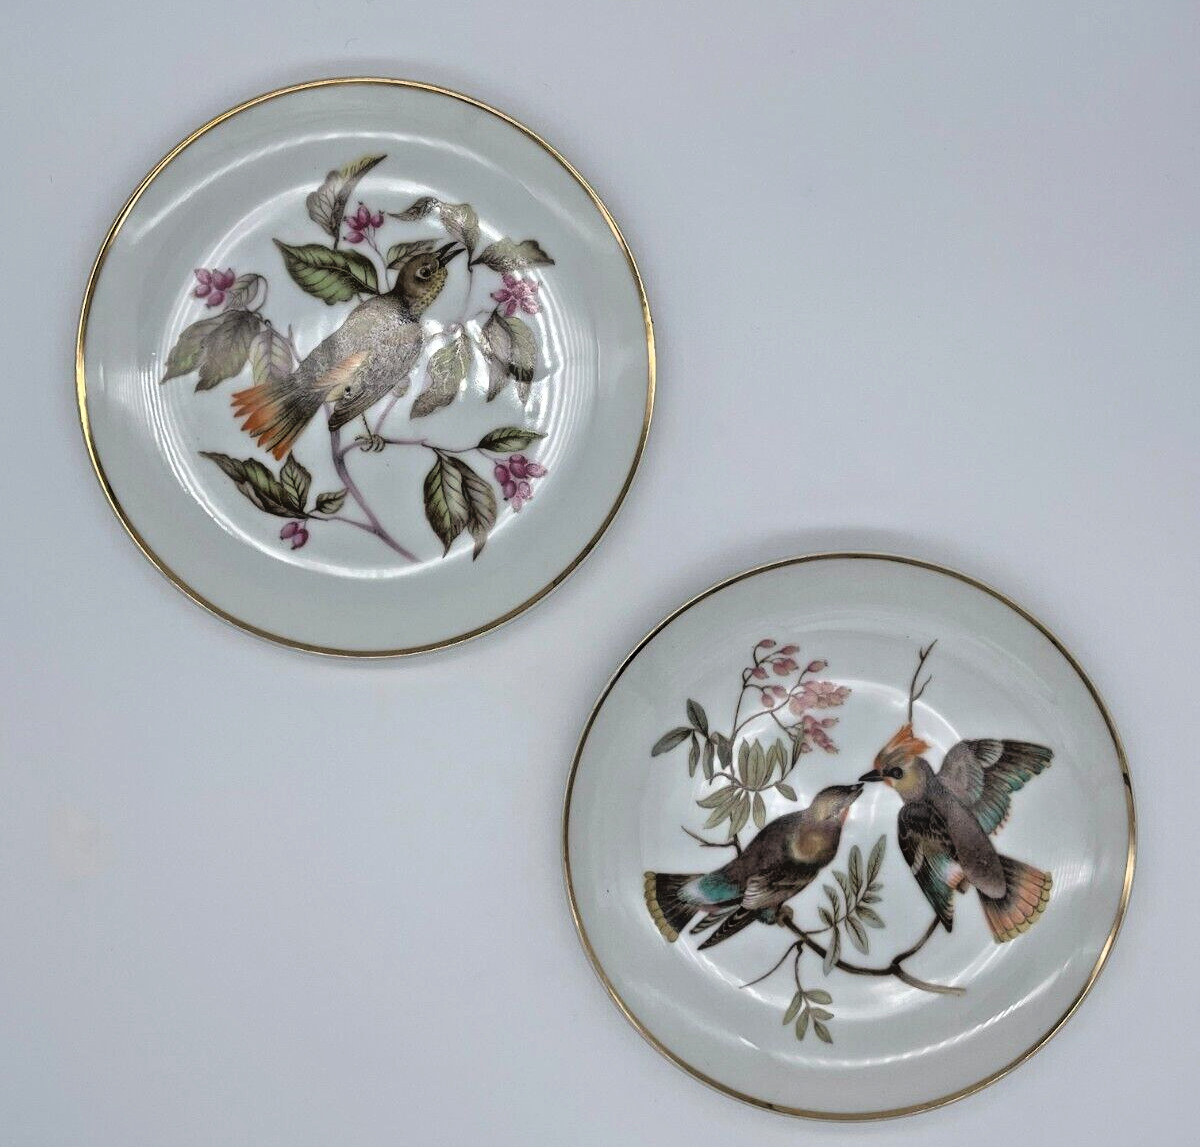 2 Vintage Royal Halsey Very Fine China Plates with Birds Lipper & Mann Japan-A20